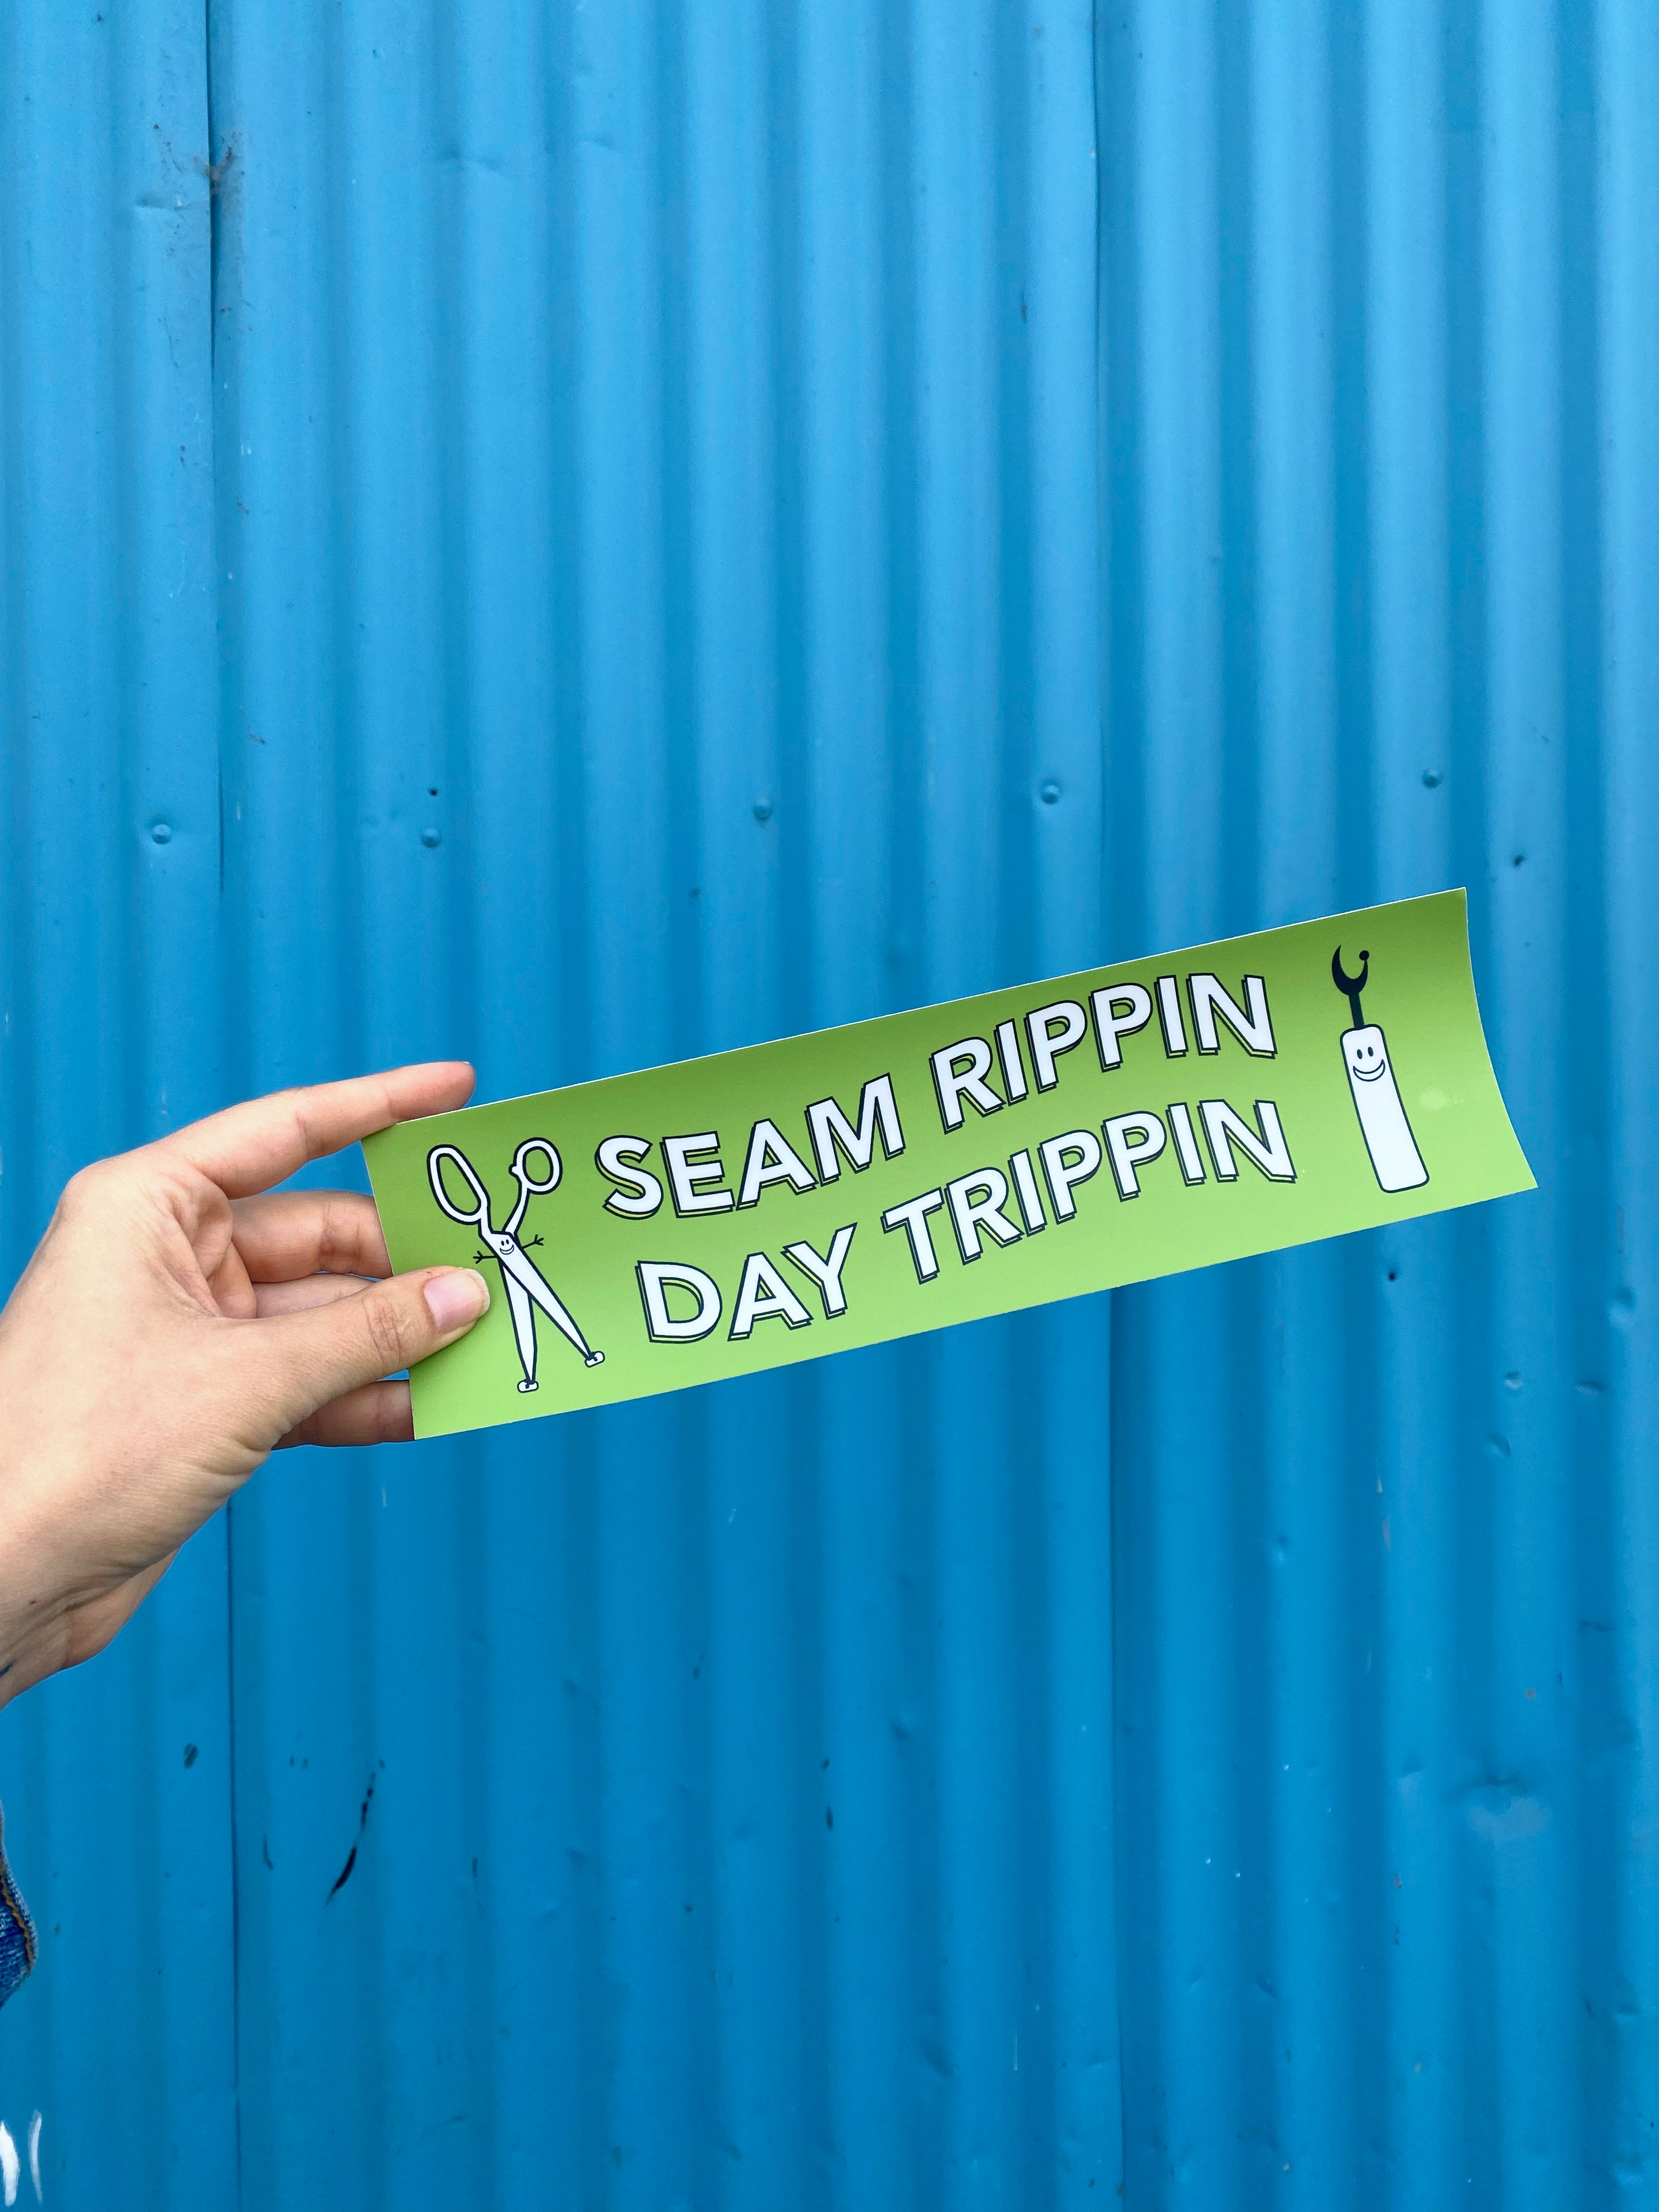 Seam Rippin' Day Trippin' Bumper Sticker